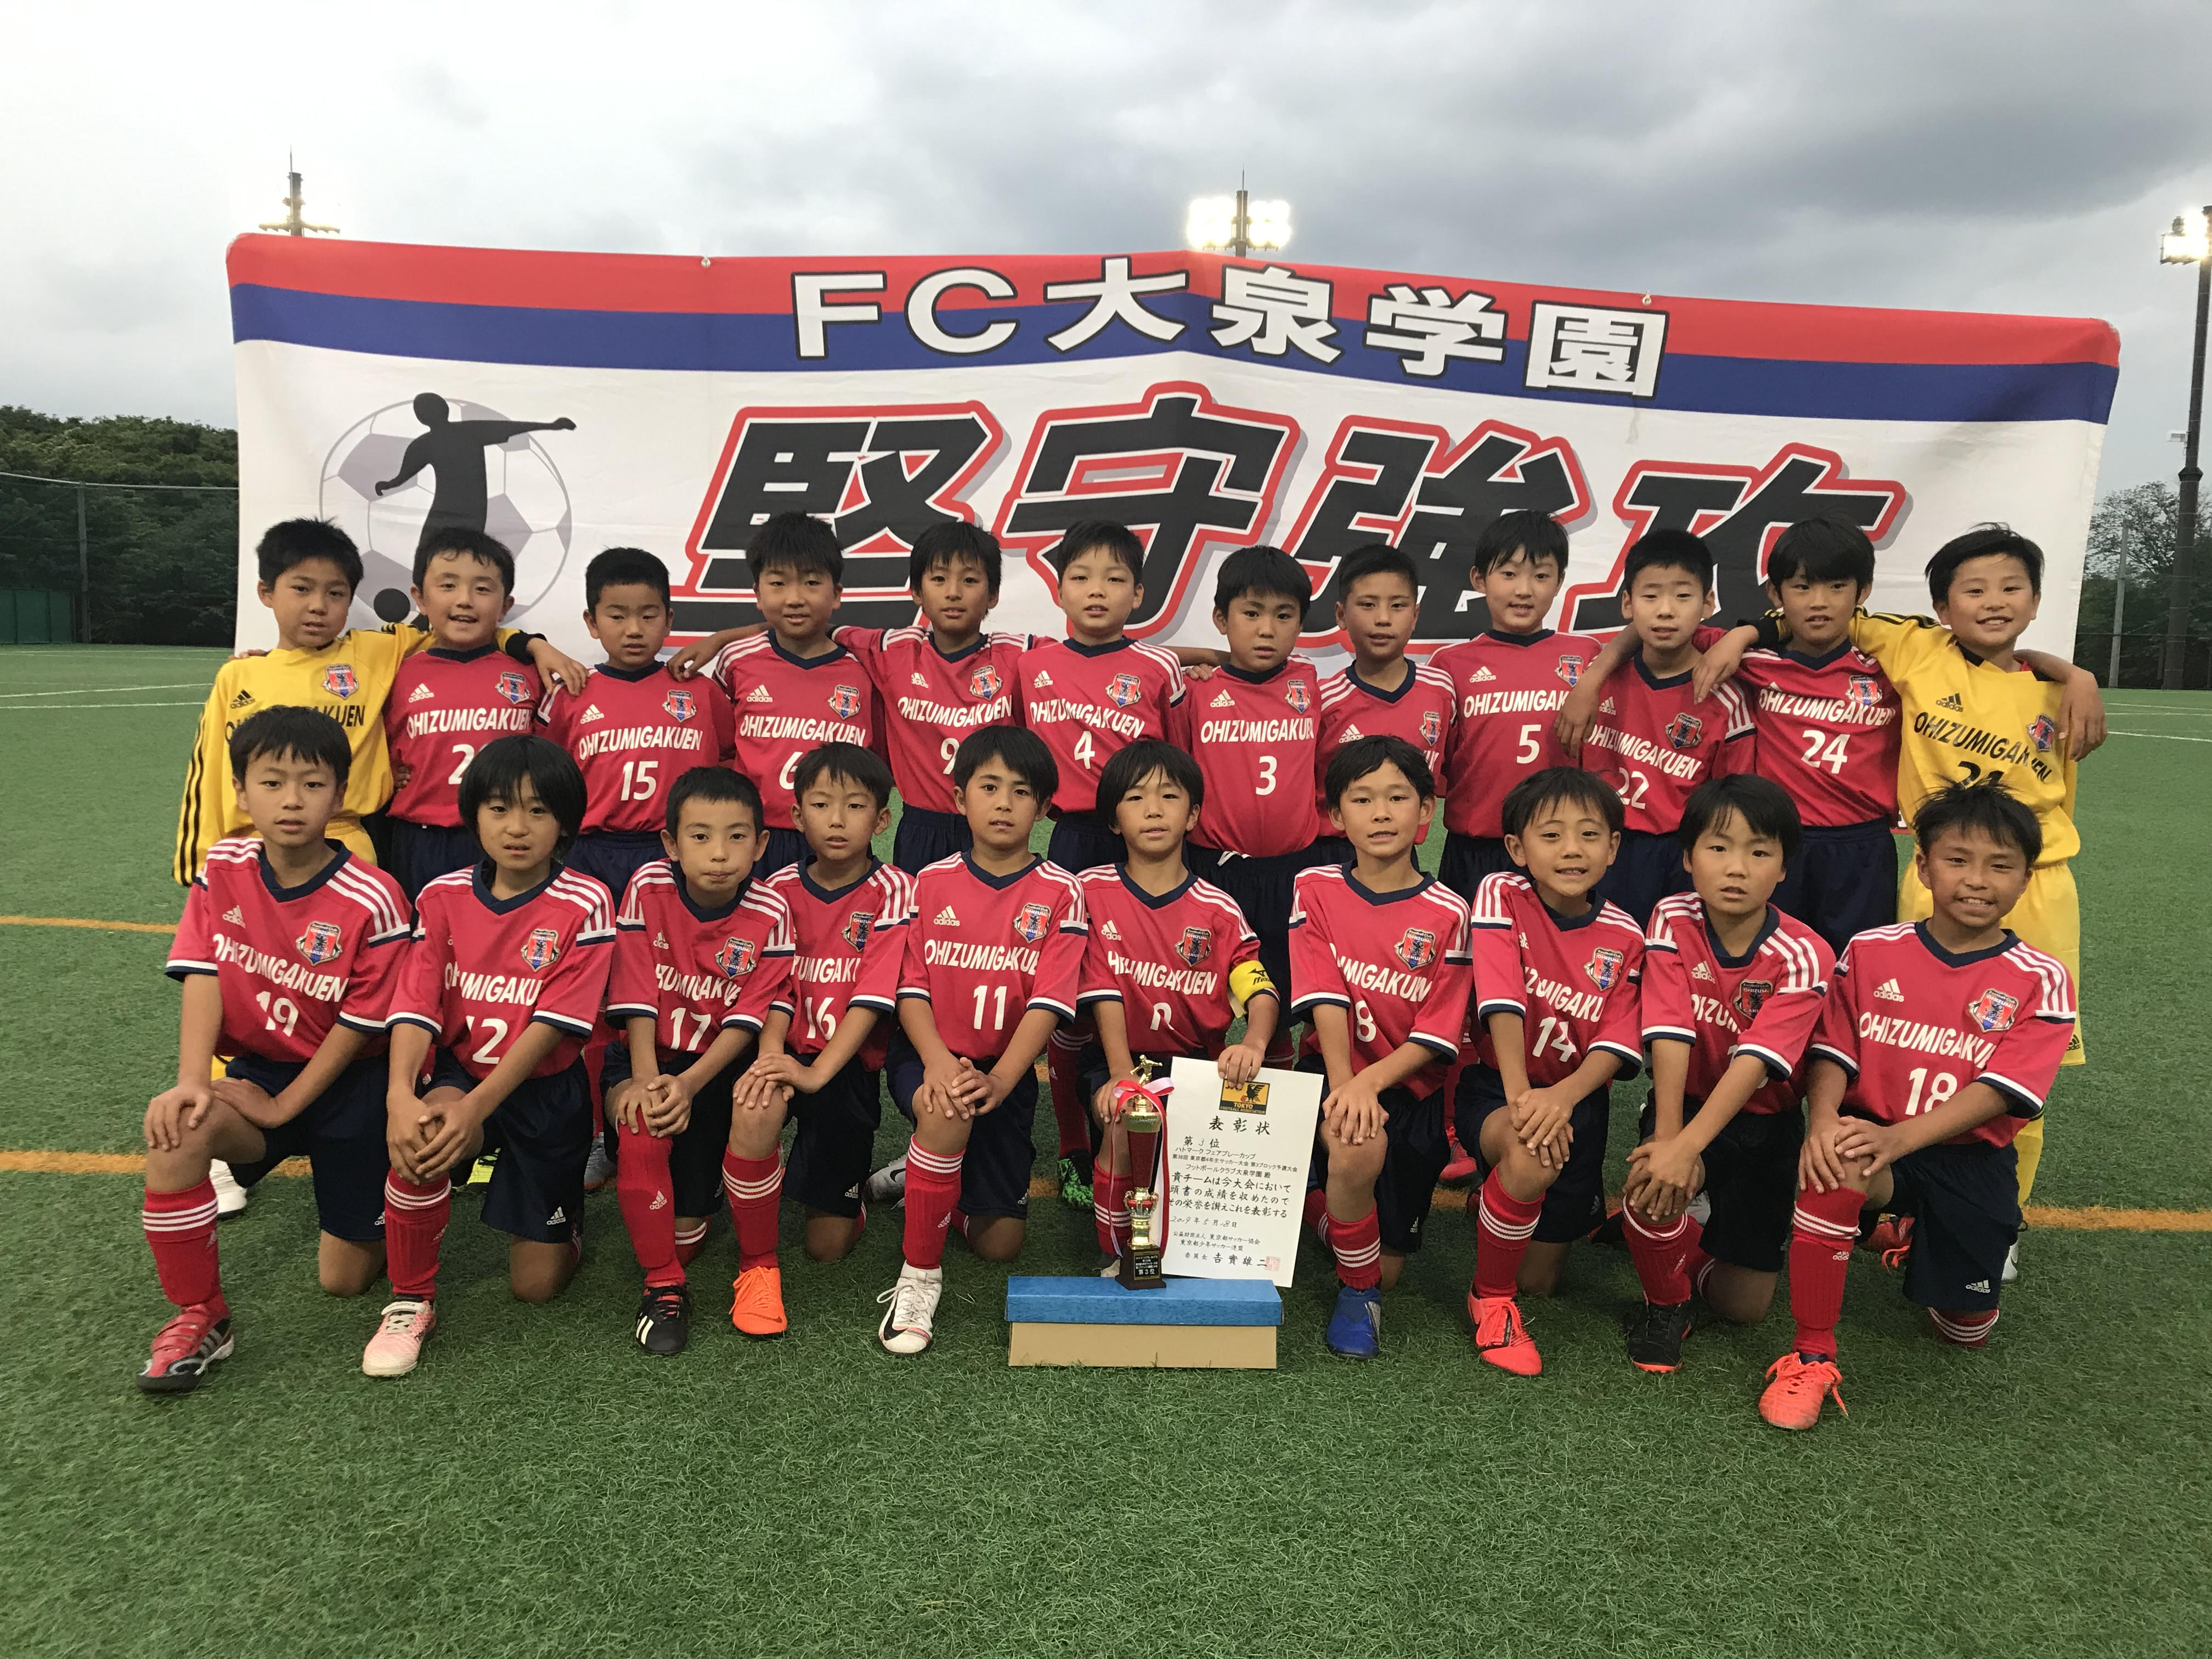 Fc大泉学園 公式サイト Football Club Ohizumigakuen Official Web Site